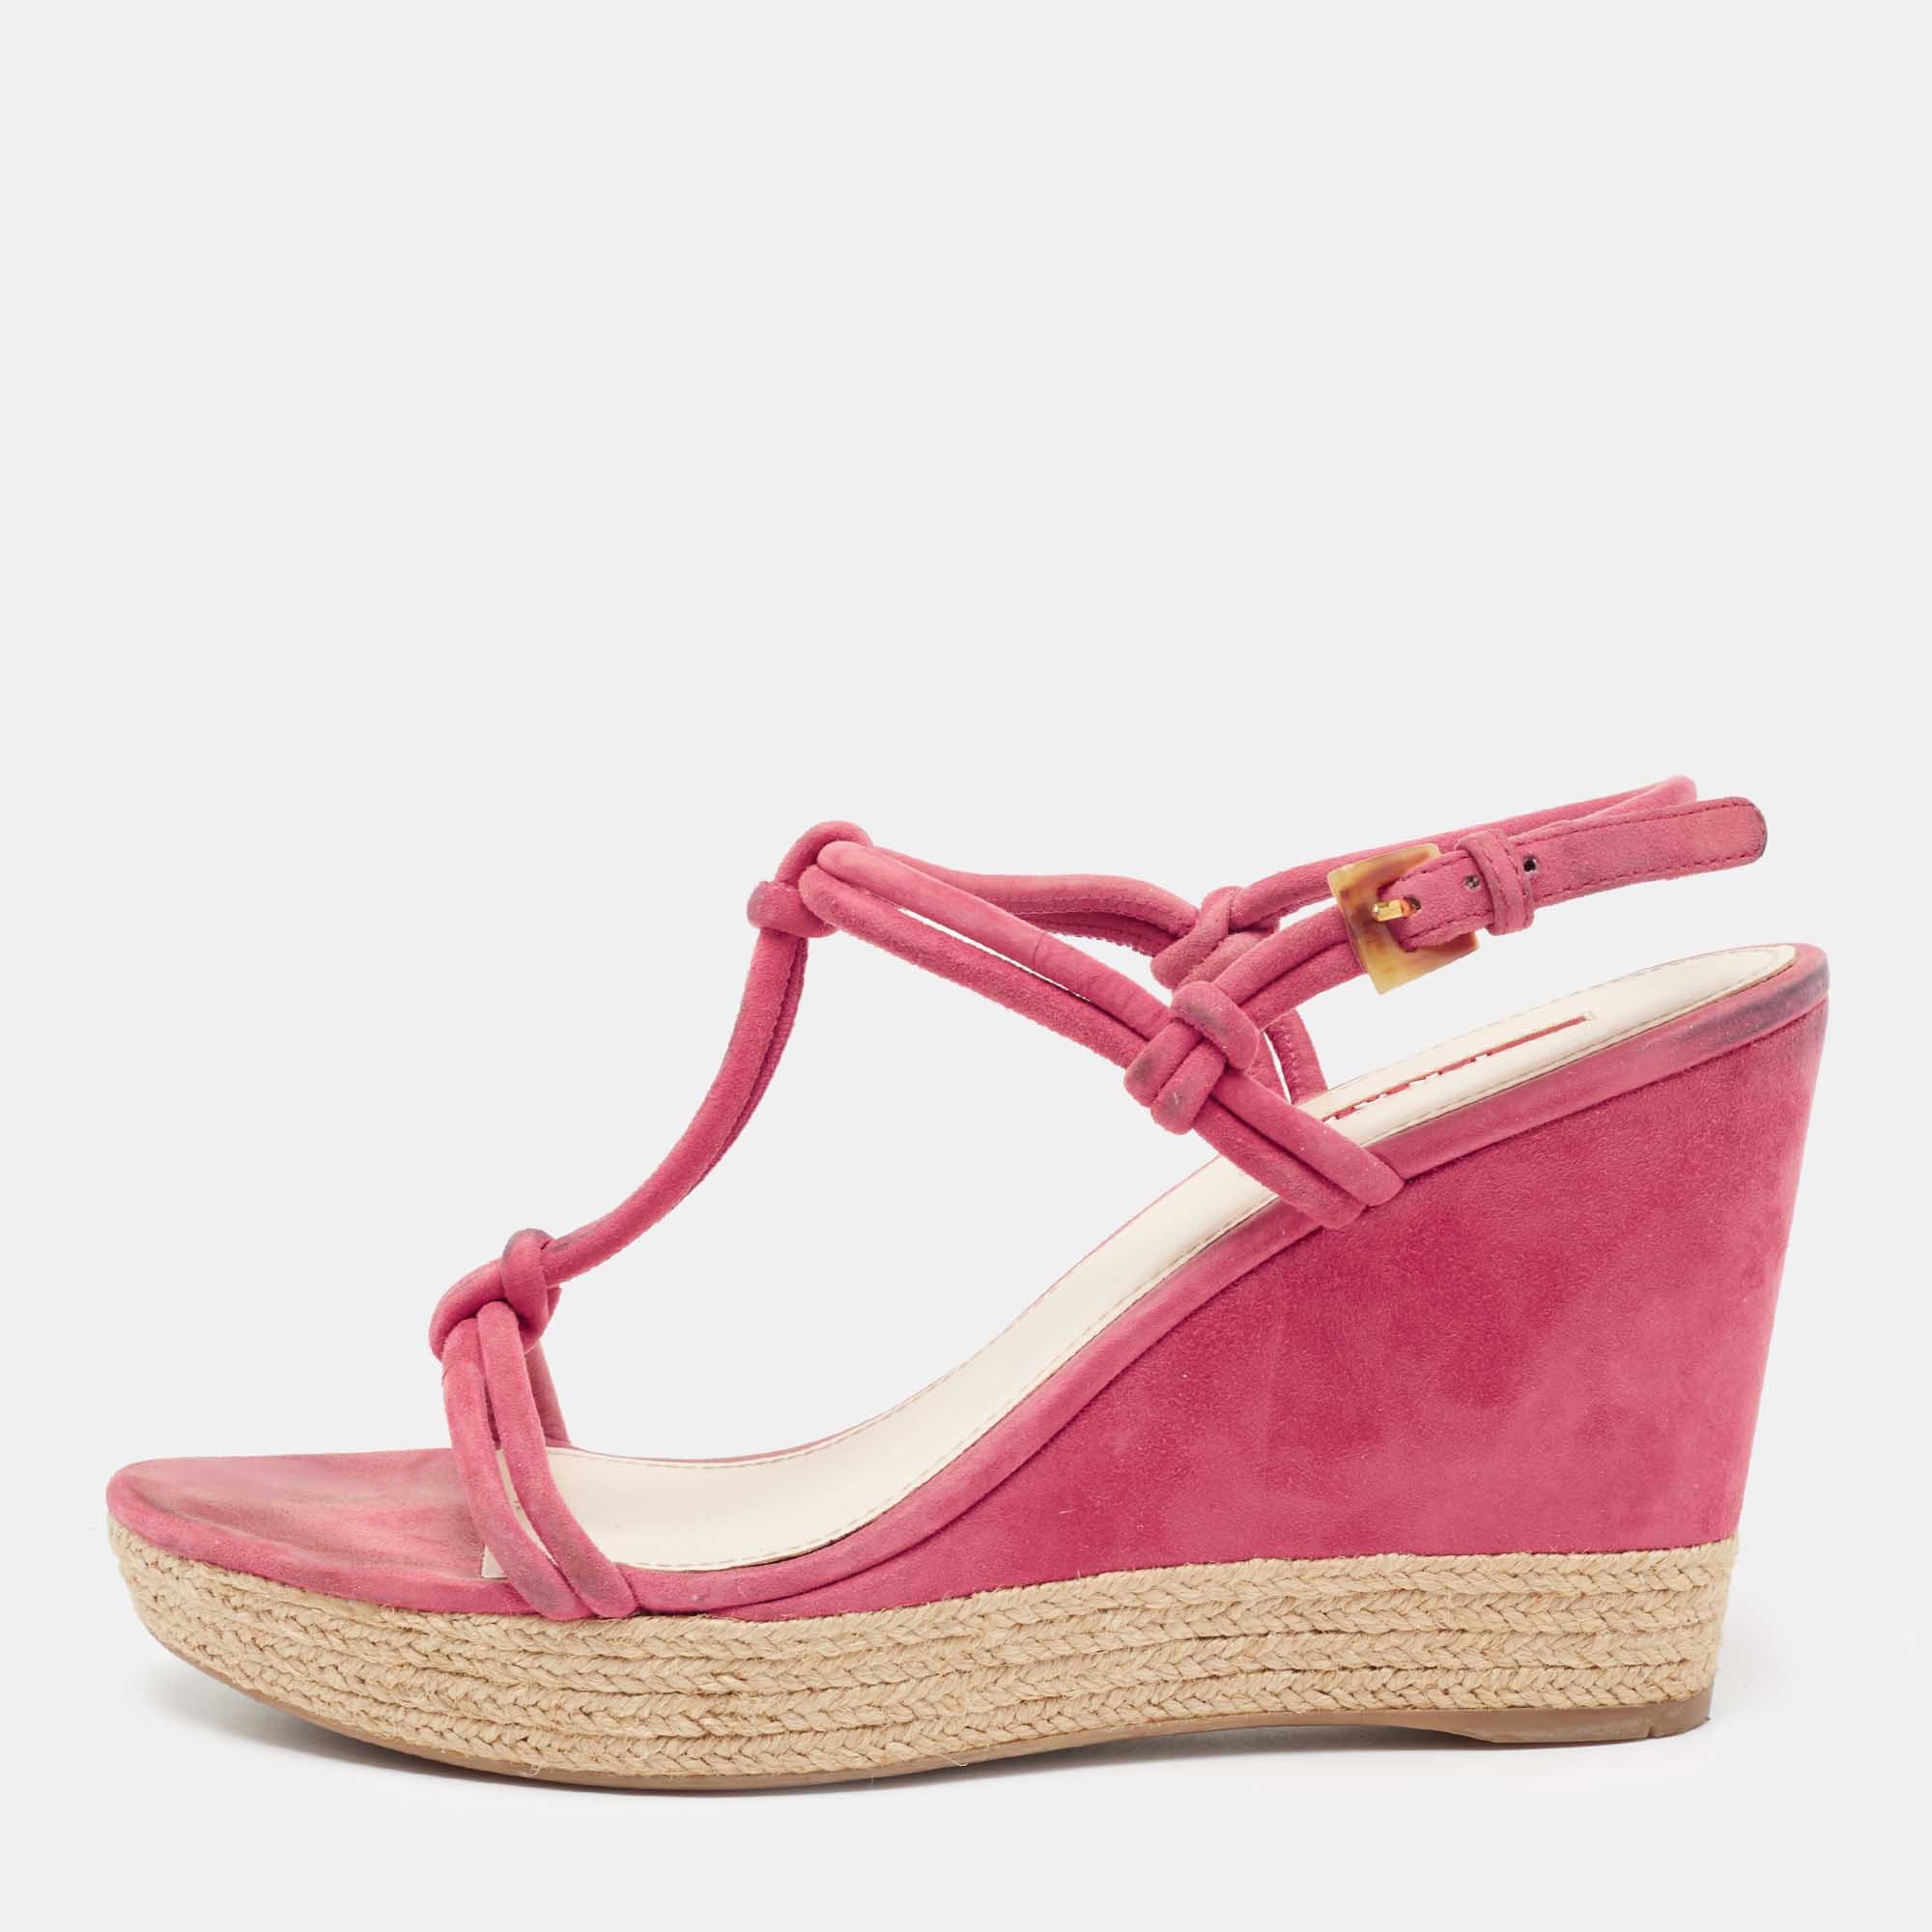 Prada fuschia pink suede espadrille wedge sandals size 40